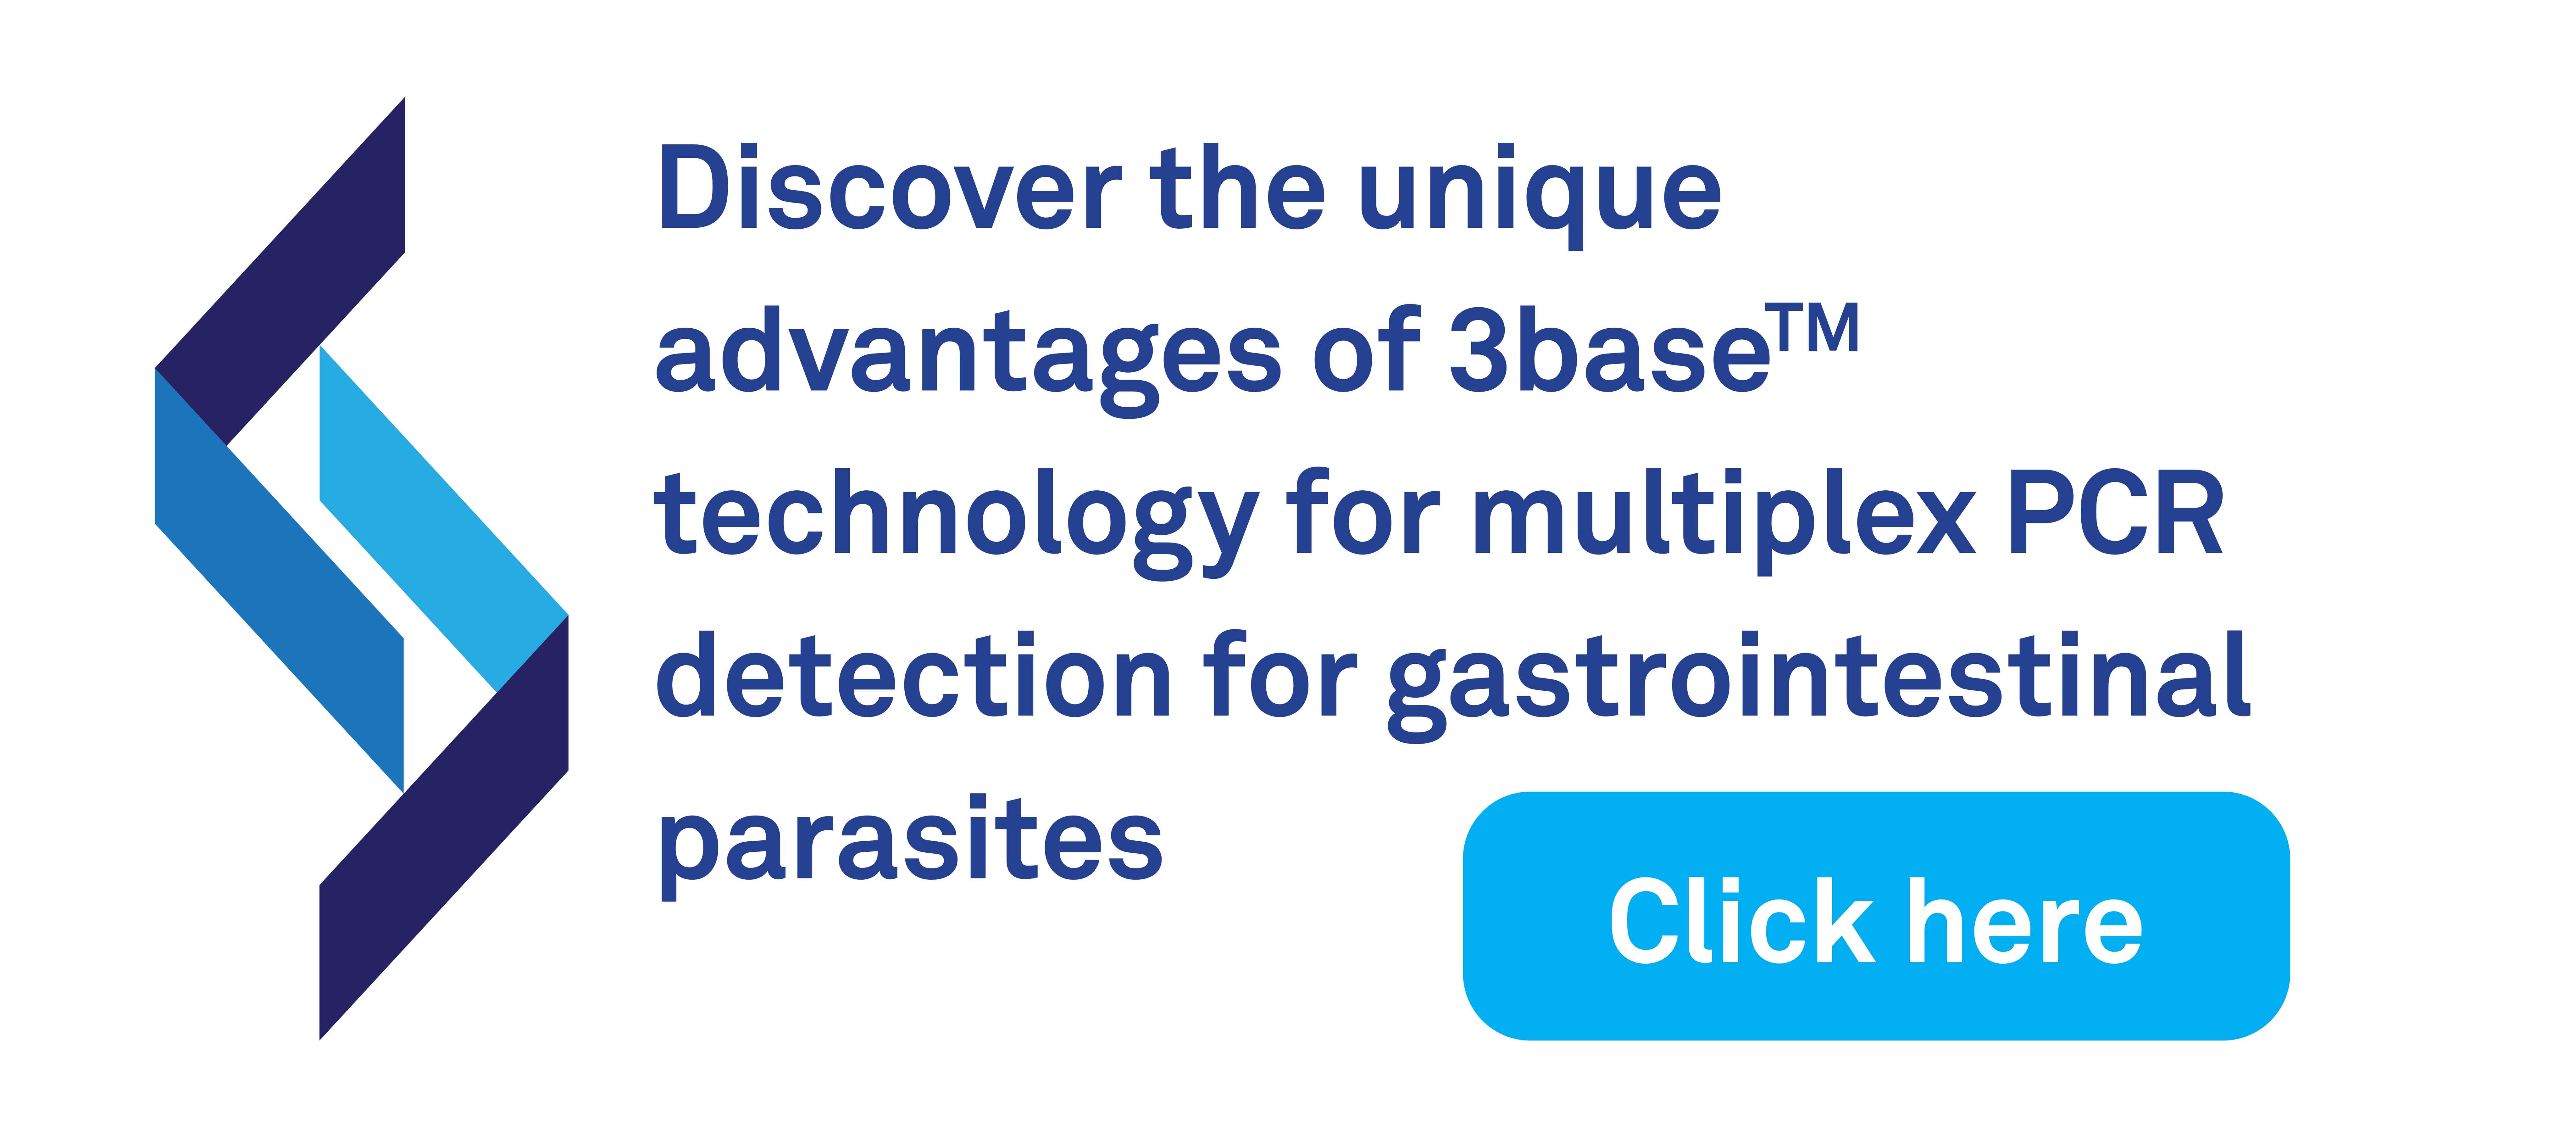 GI-Parasite-3base-Advantages-Page